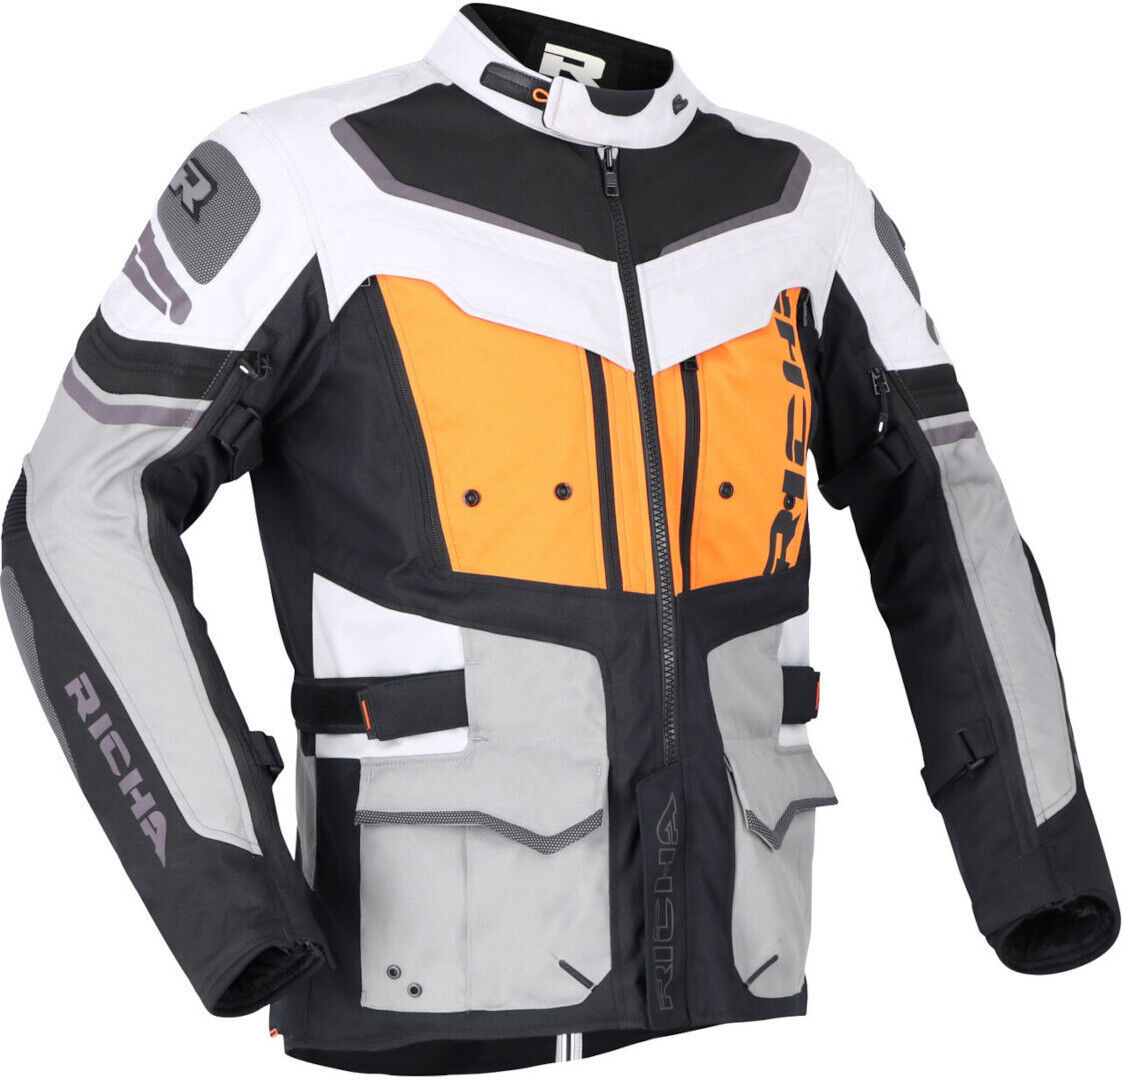 Richa Infinity 2 Adventure chaqueta textil impermeable para motocicleta - Negro Gris Naranja (2XL)